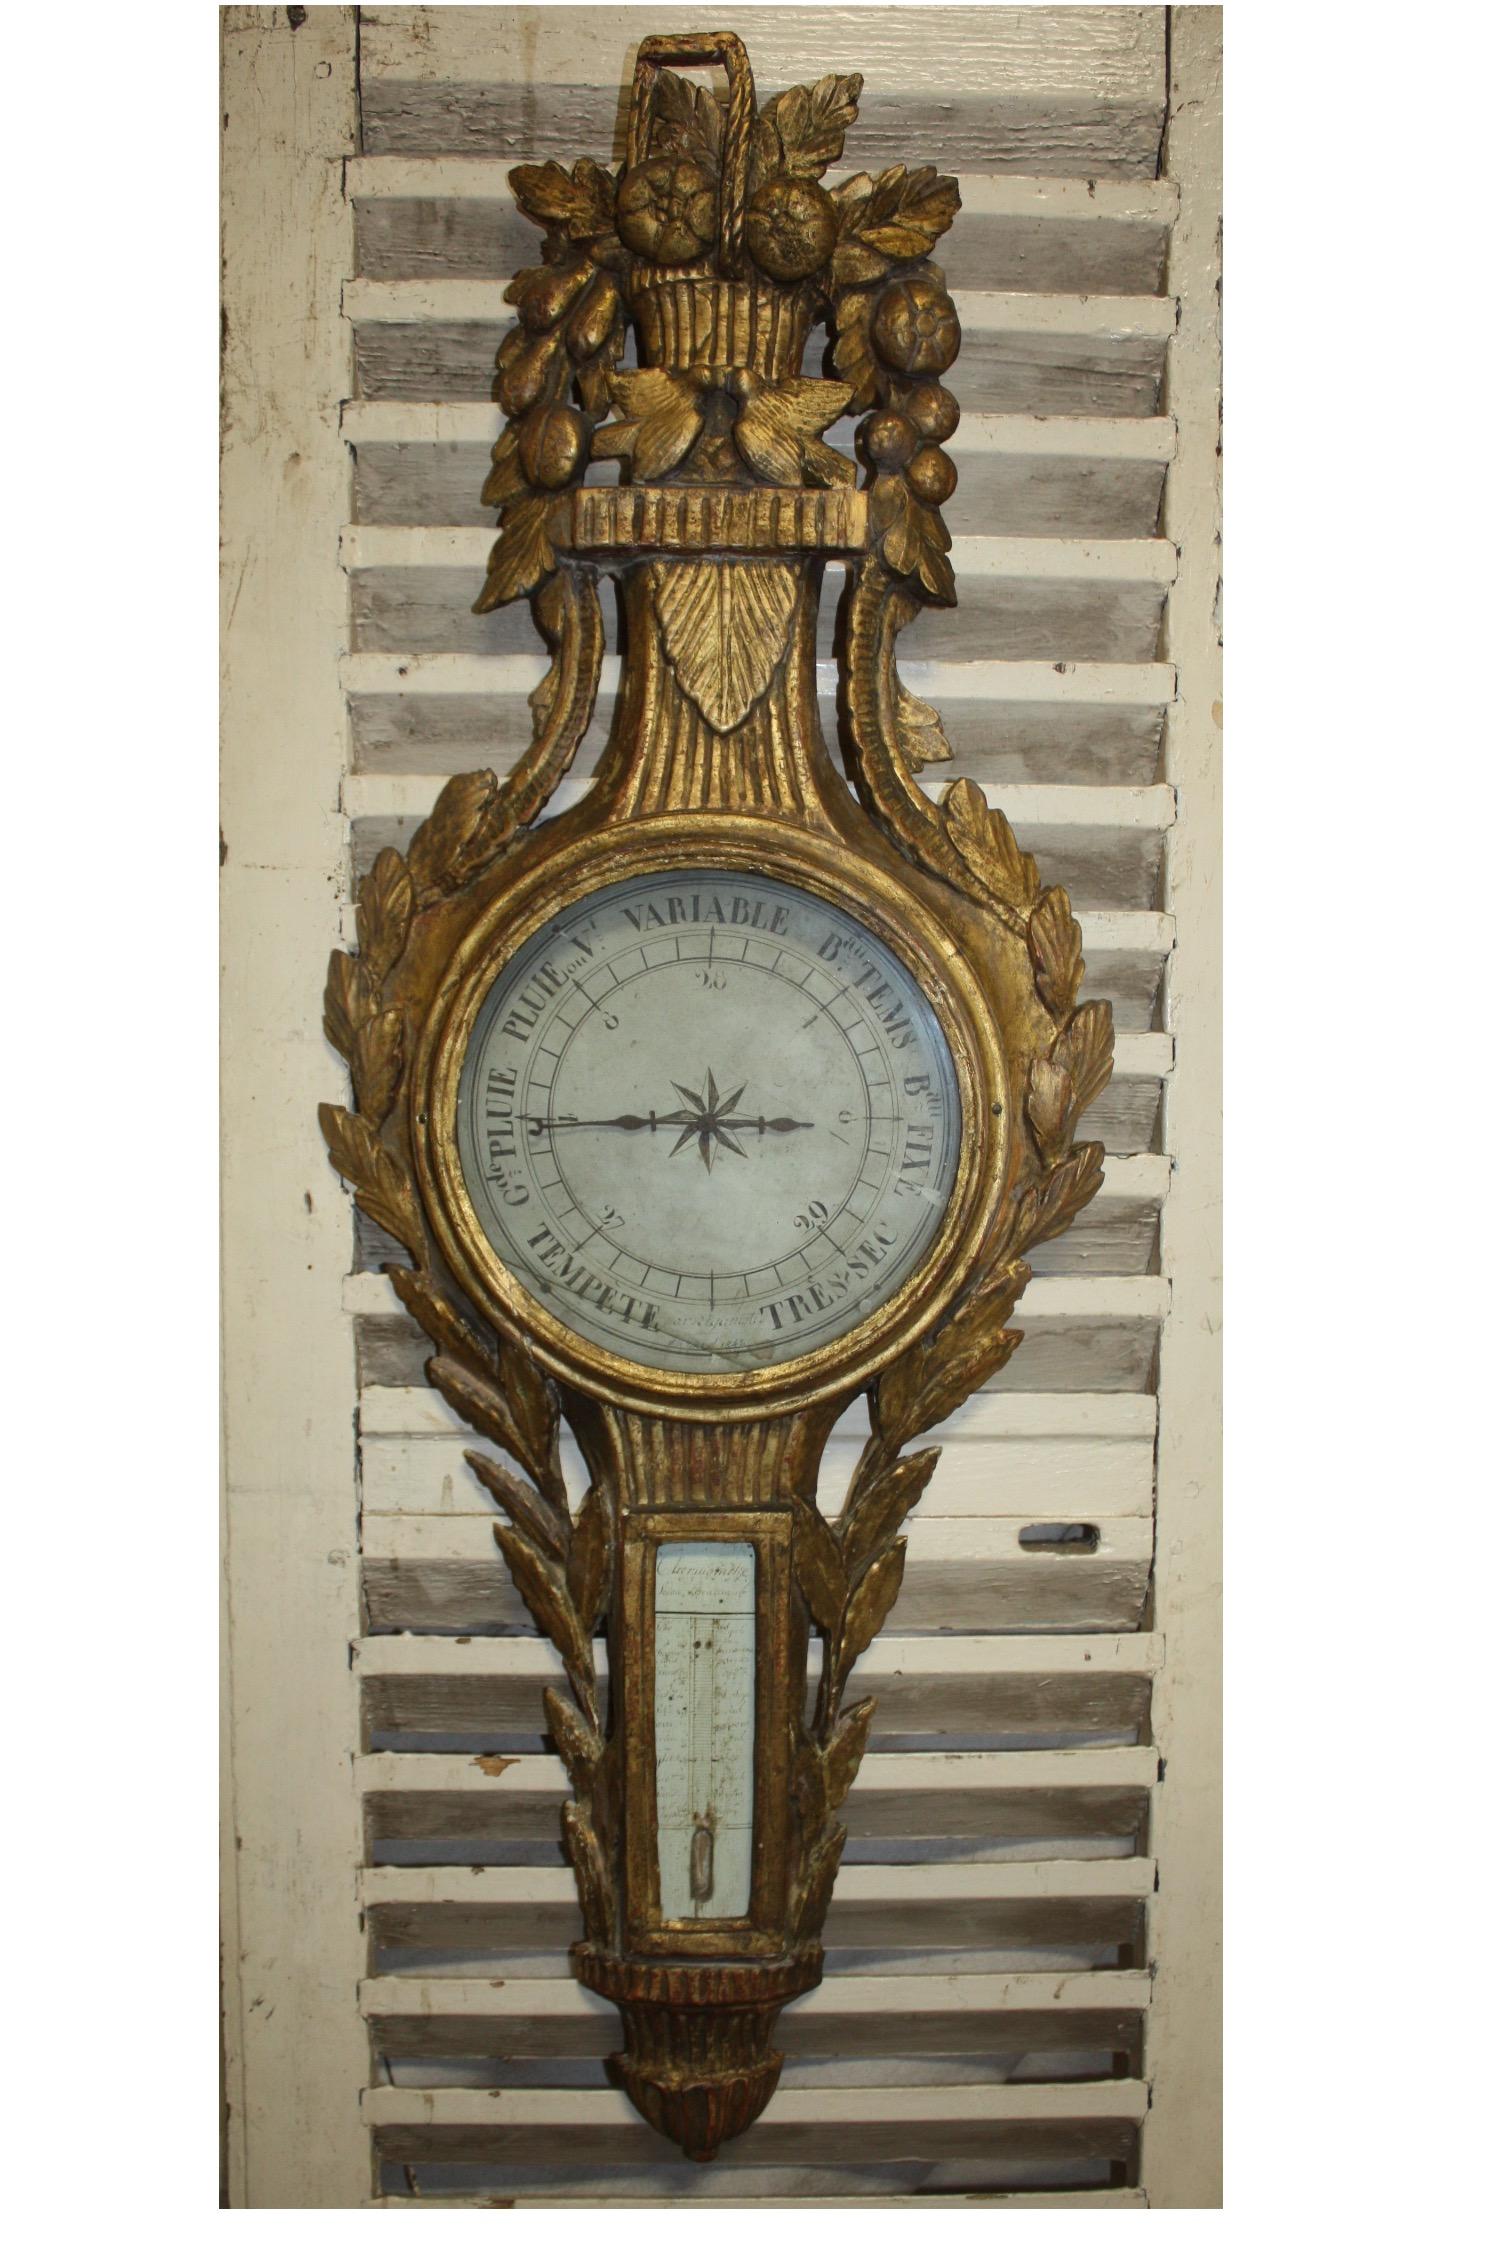 Beautiful 18th century French barometer.